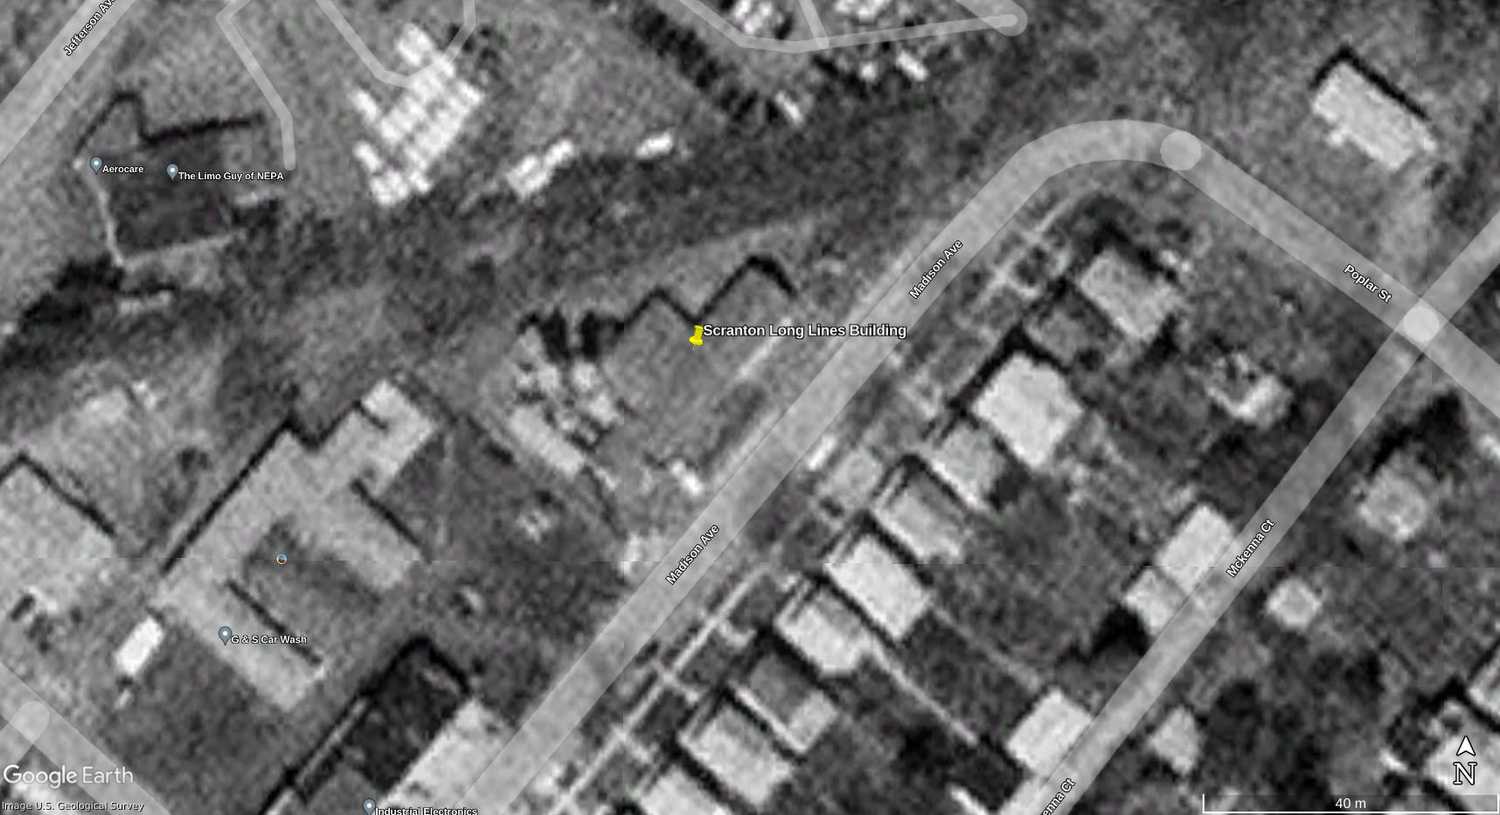 Scranton Long Lines Center 1999 Satellite View